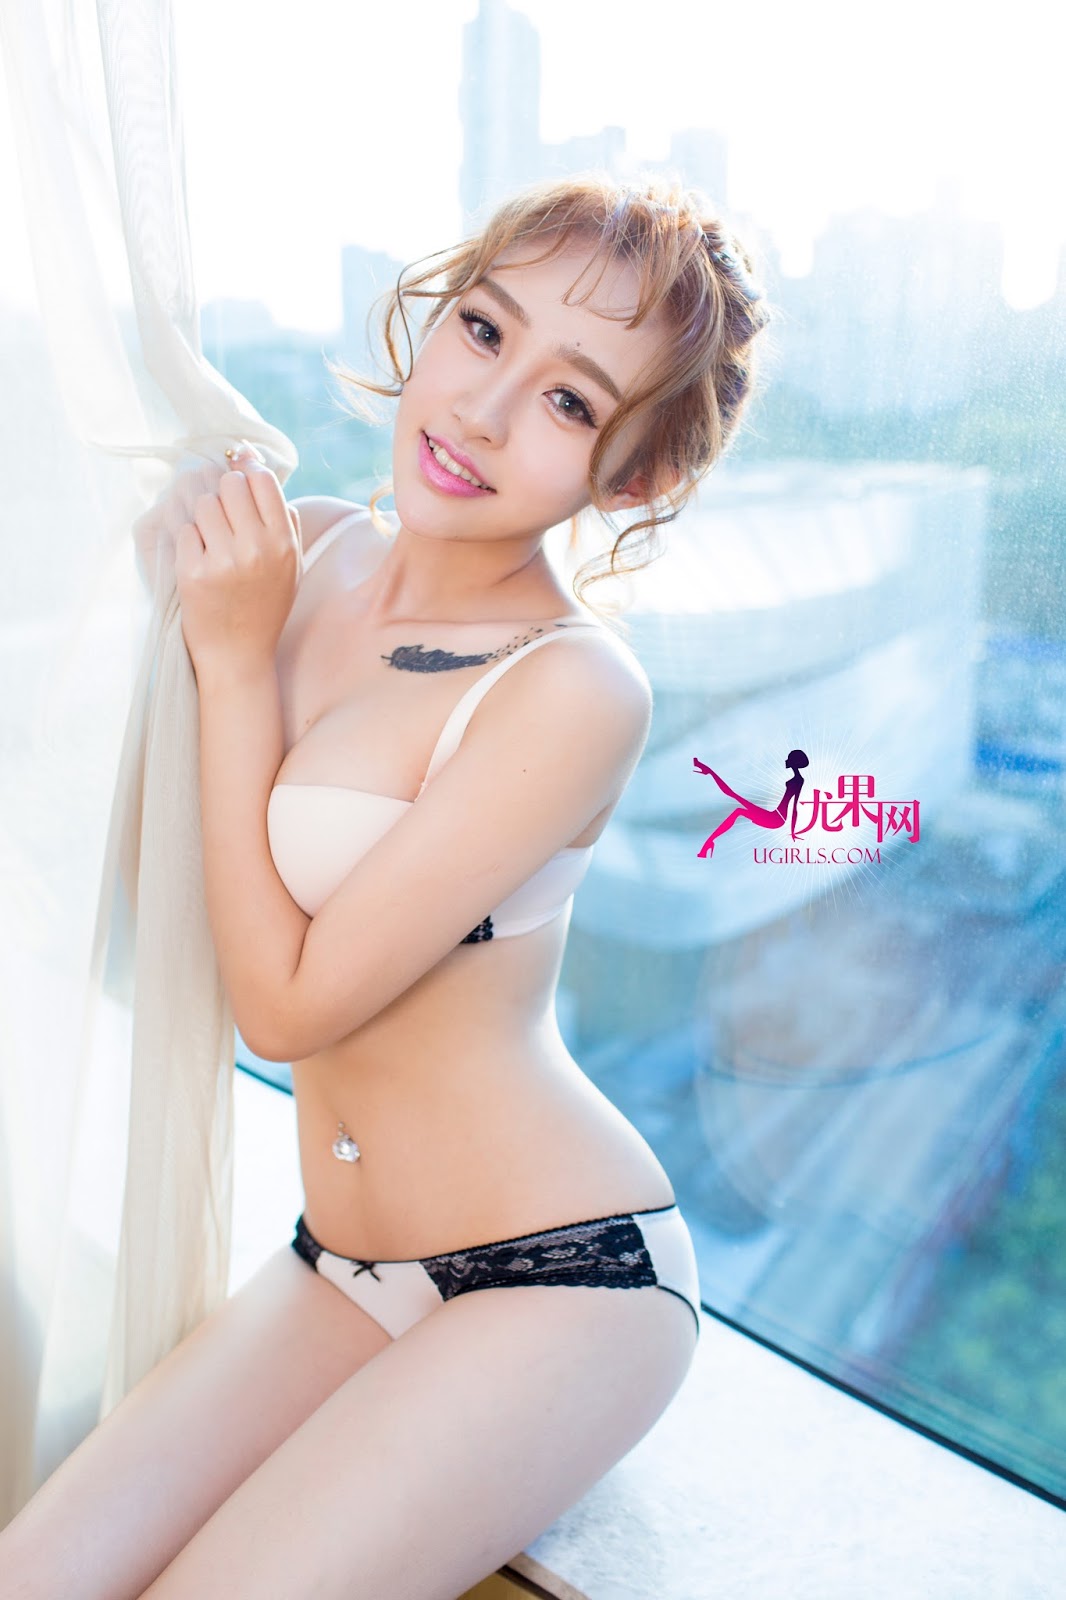 Teens Xinyang nude in no pics Young Asian